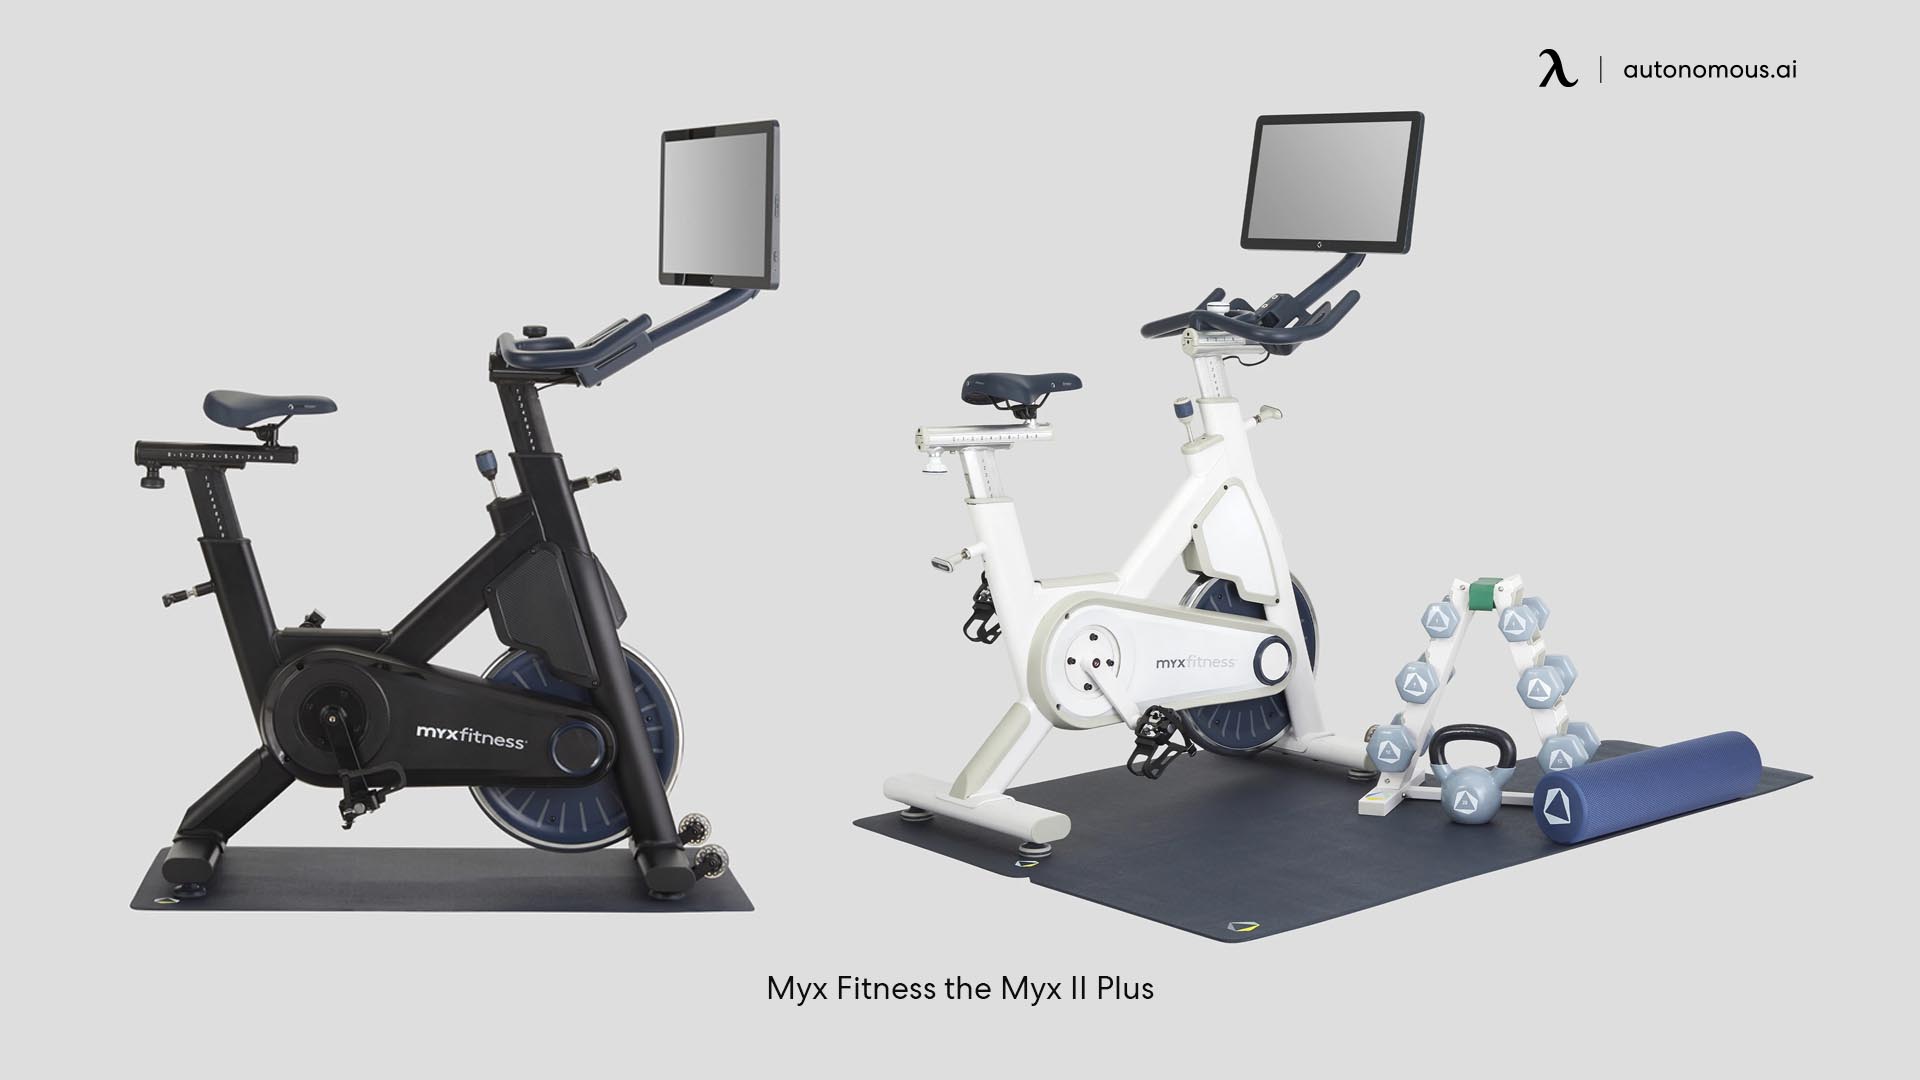 Myx Fitness the Myx II Plus